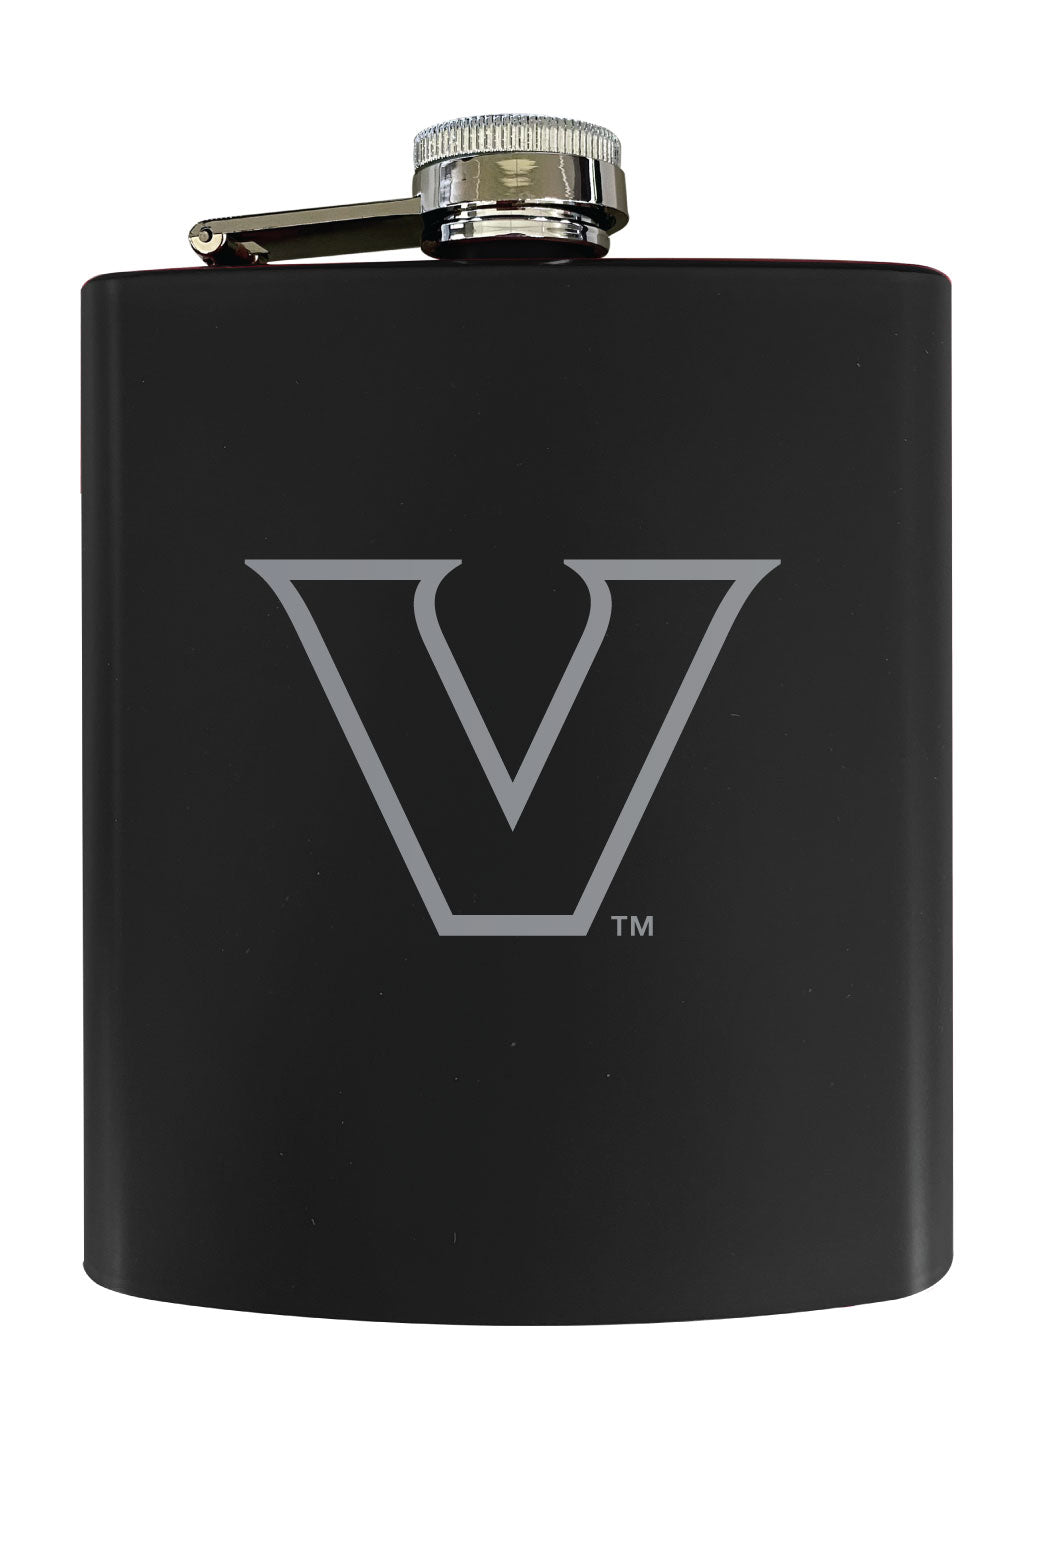 Vanderbilt University Stainless Steel Etched Flask - Choose Your Color